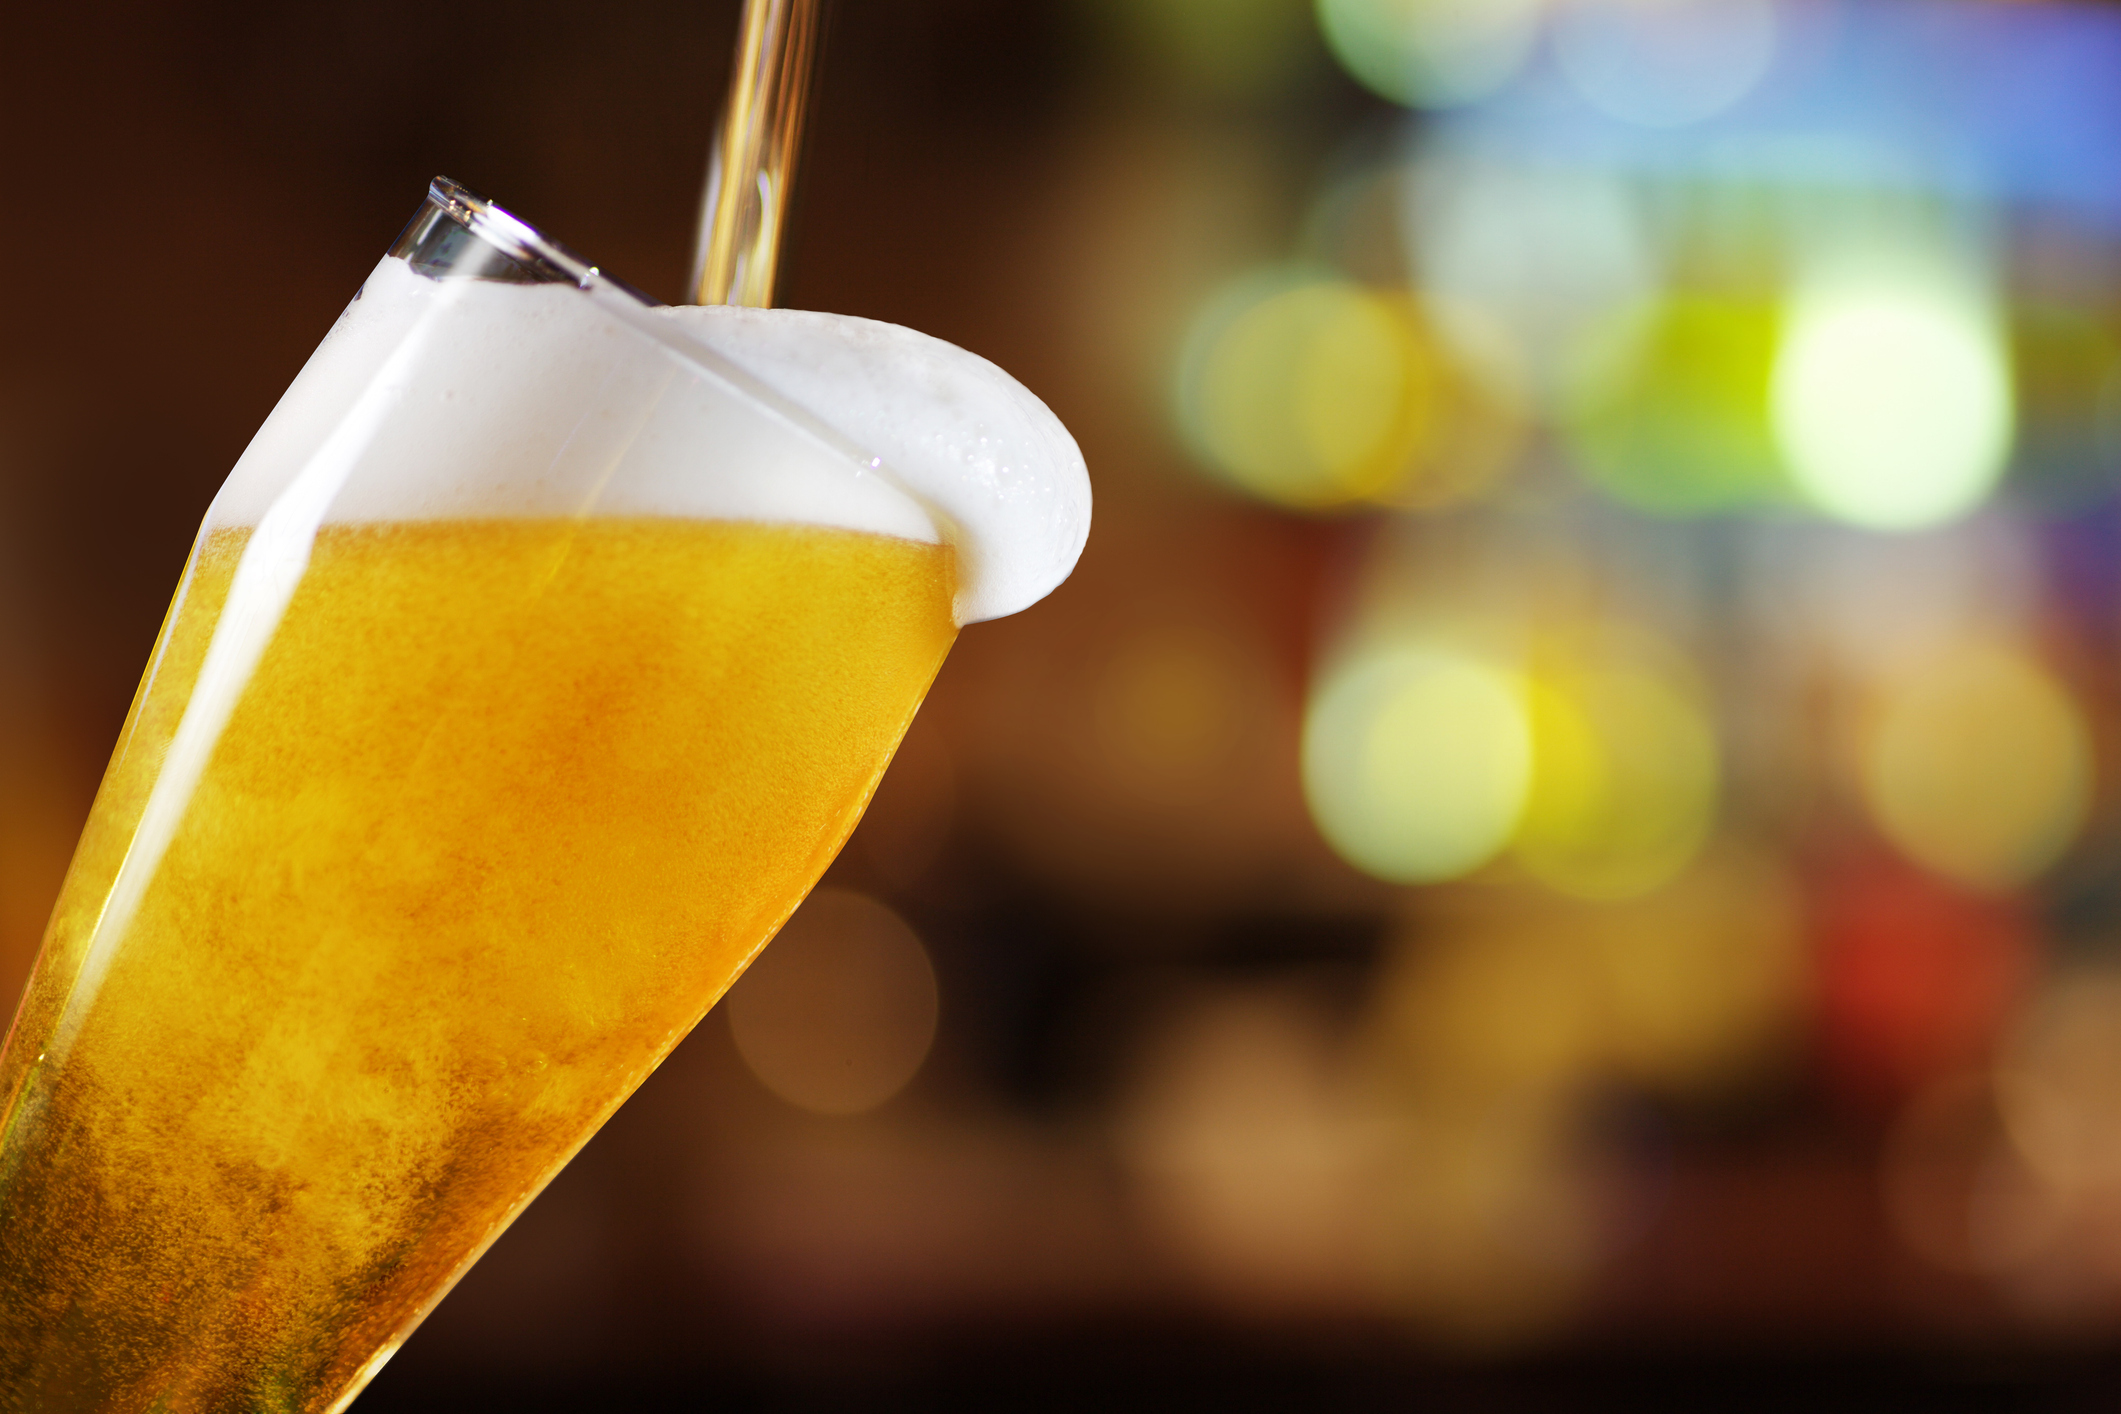 Glass Of Beer Sensory Claim Substantiation Image